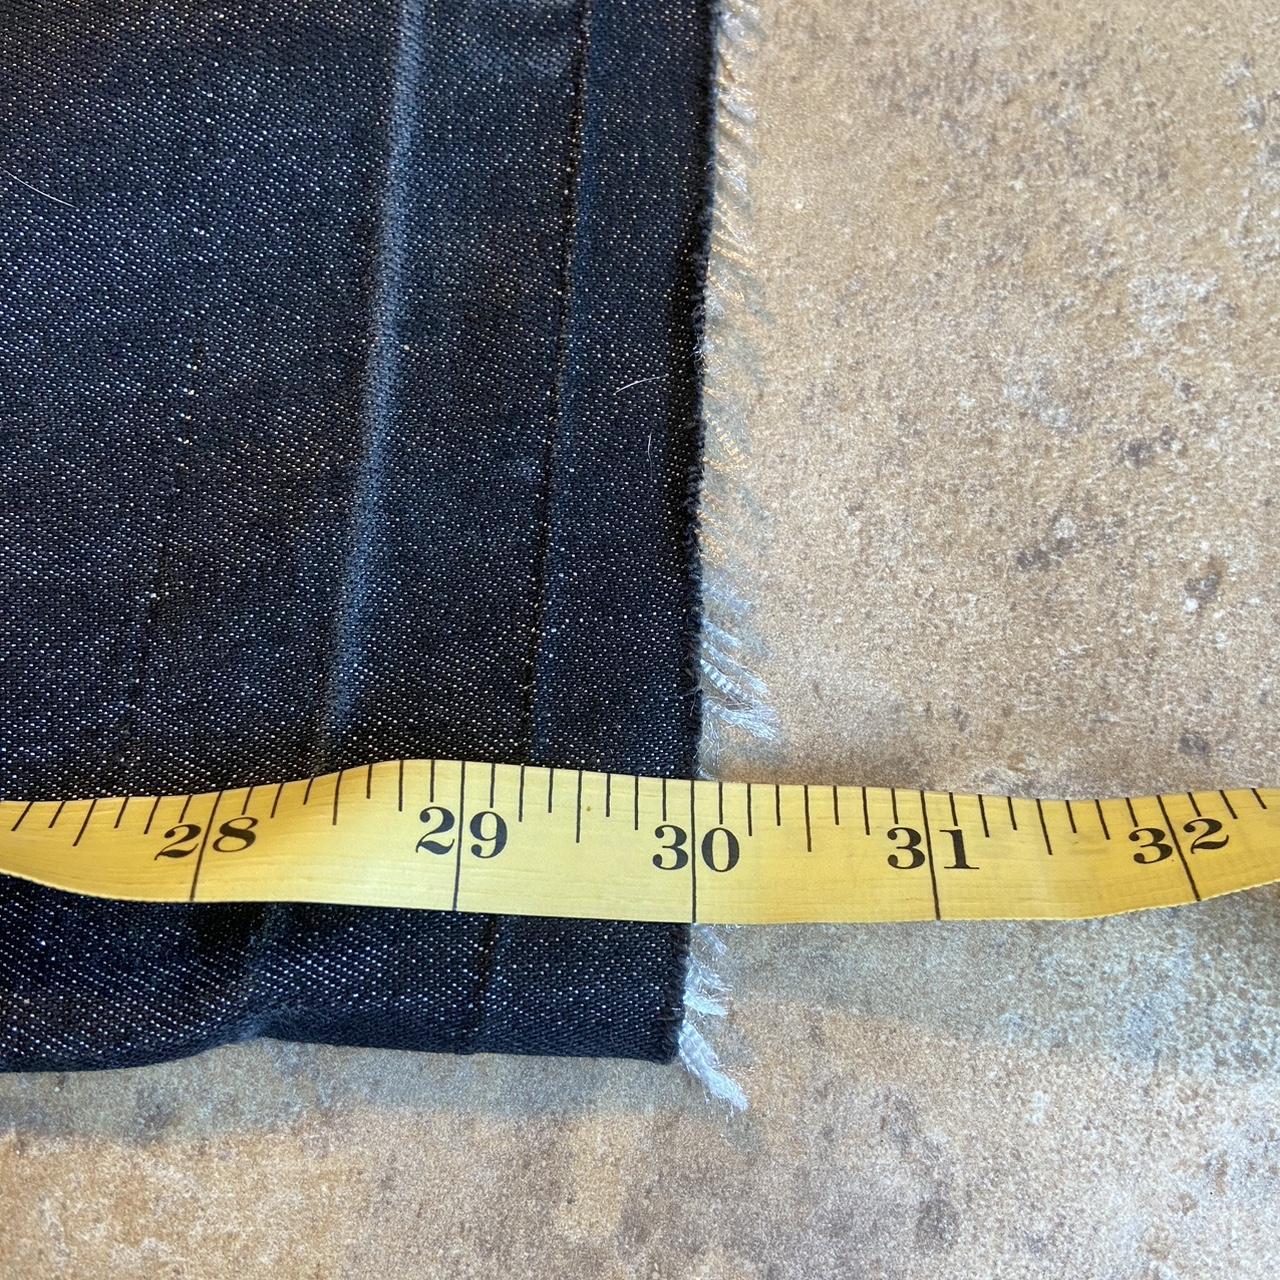 Vintage ecko unltd black jeans missing button size... - Depop